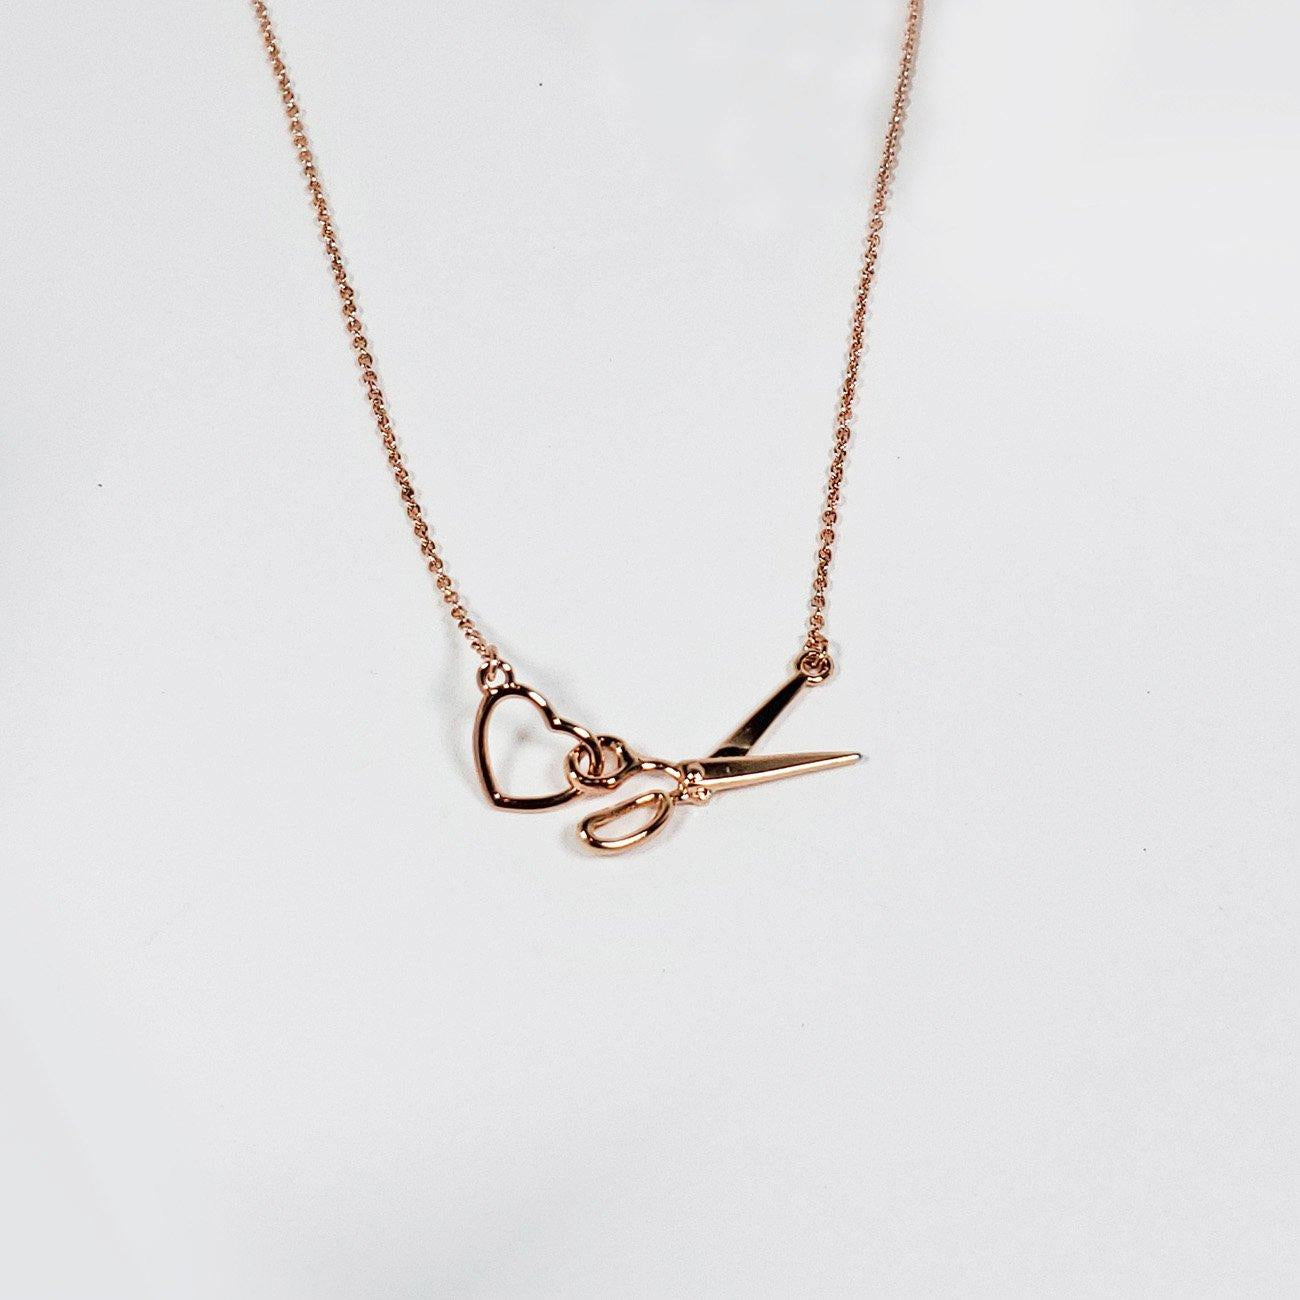 Scissor/Heart Charm Necklace